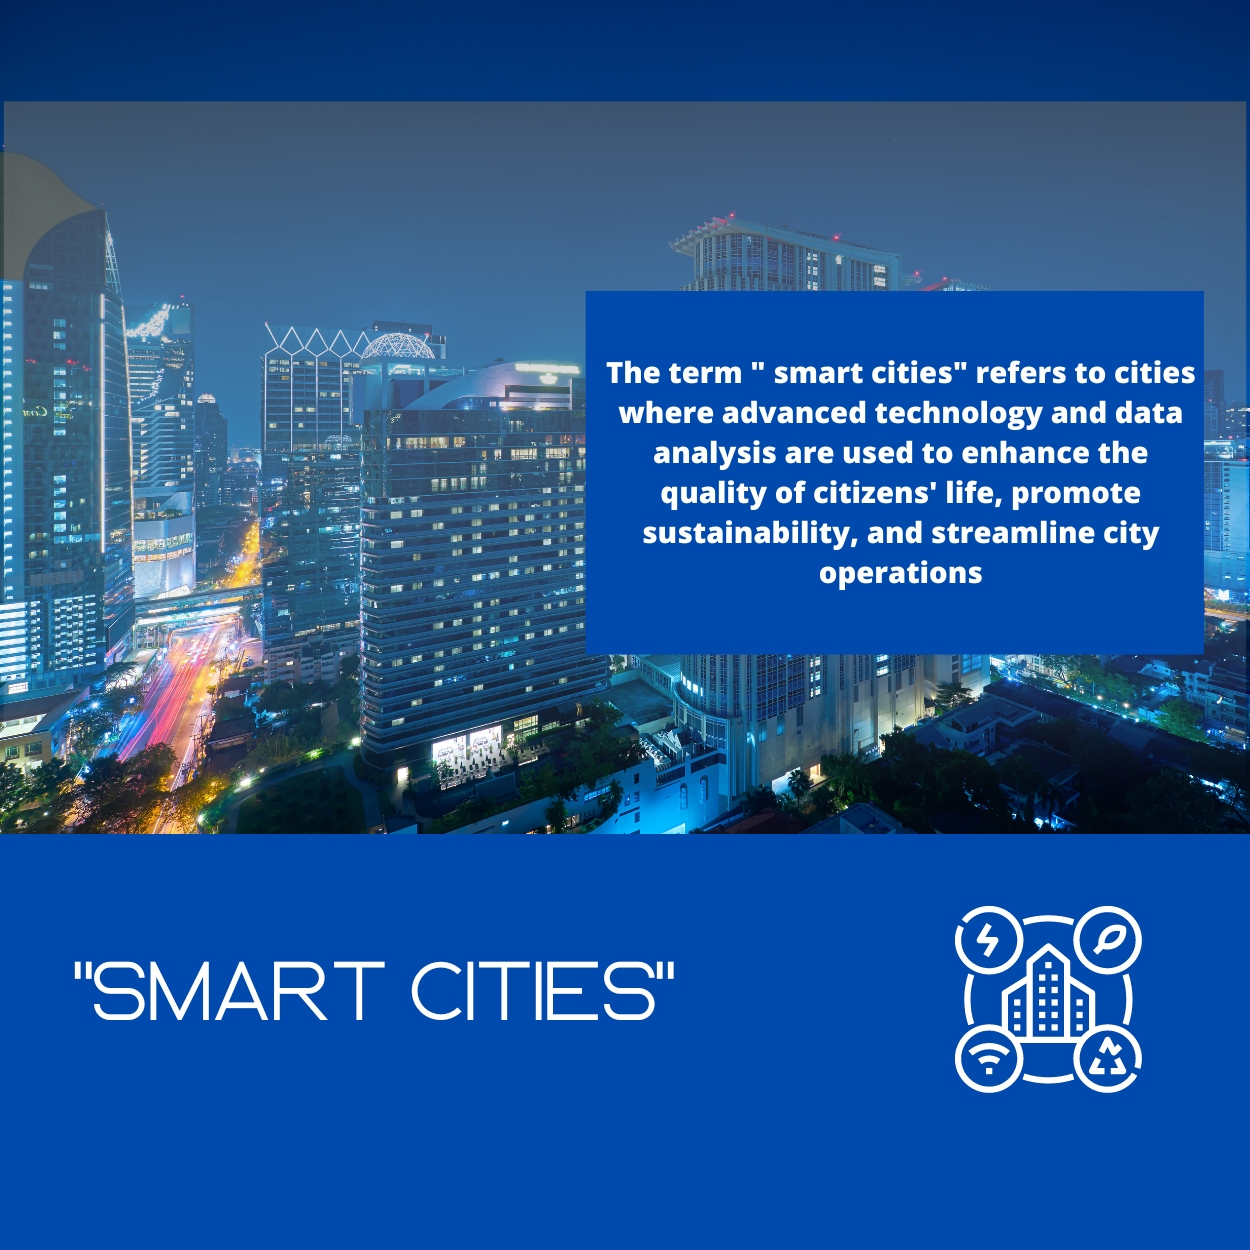 Overview of smart cities